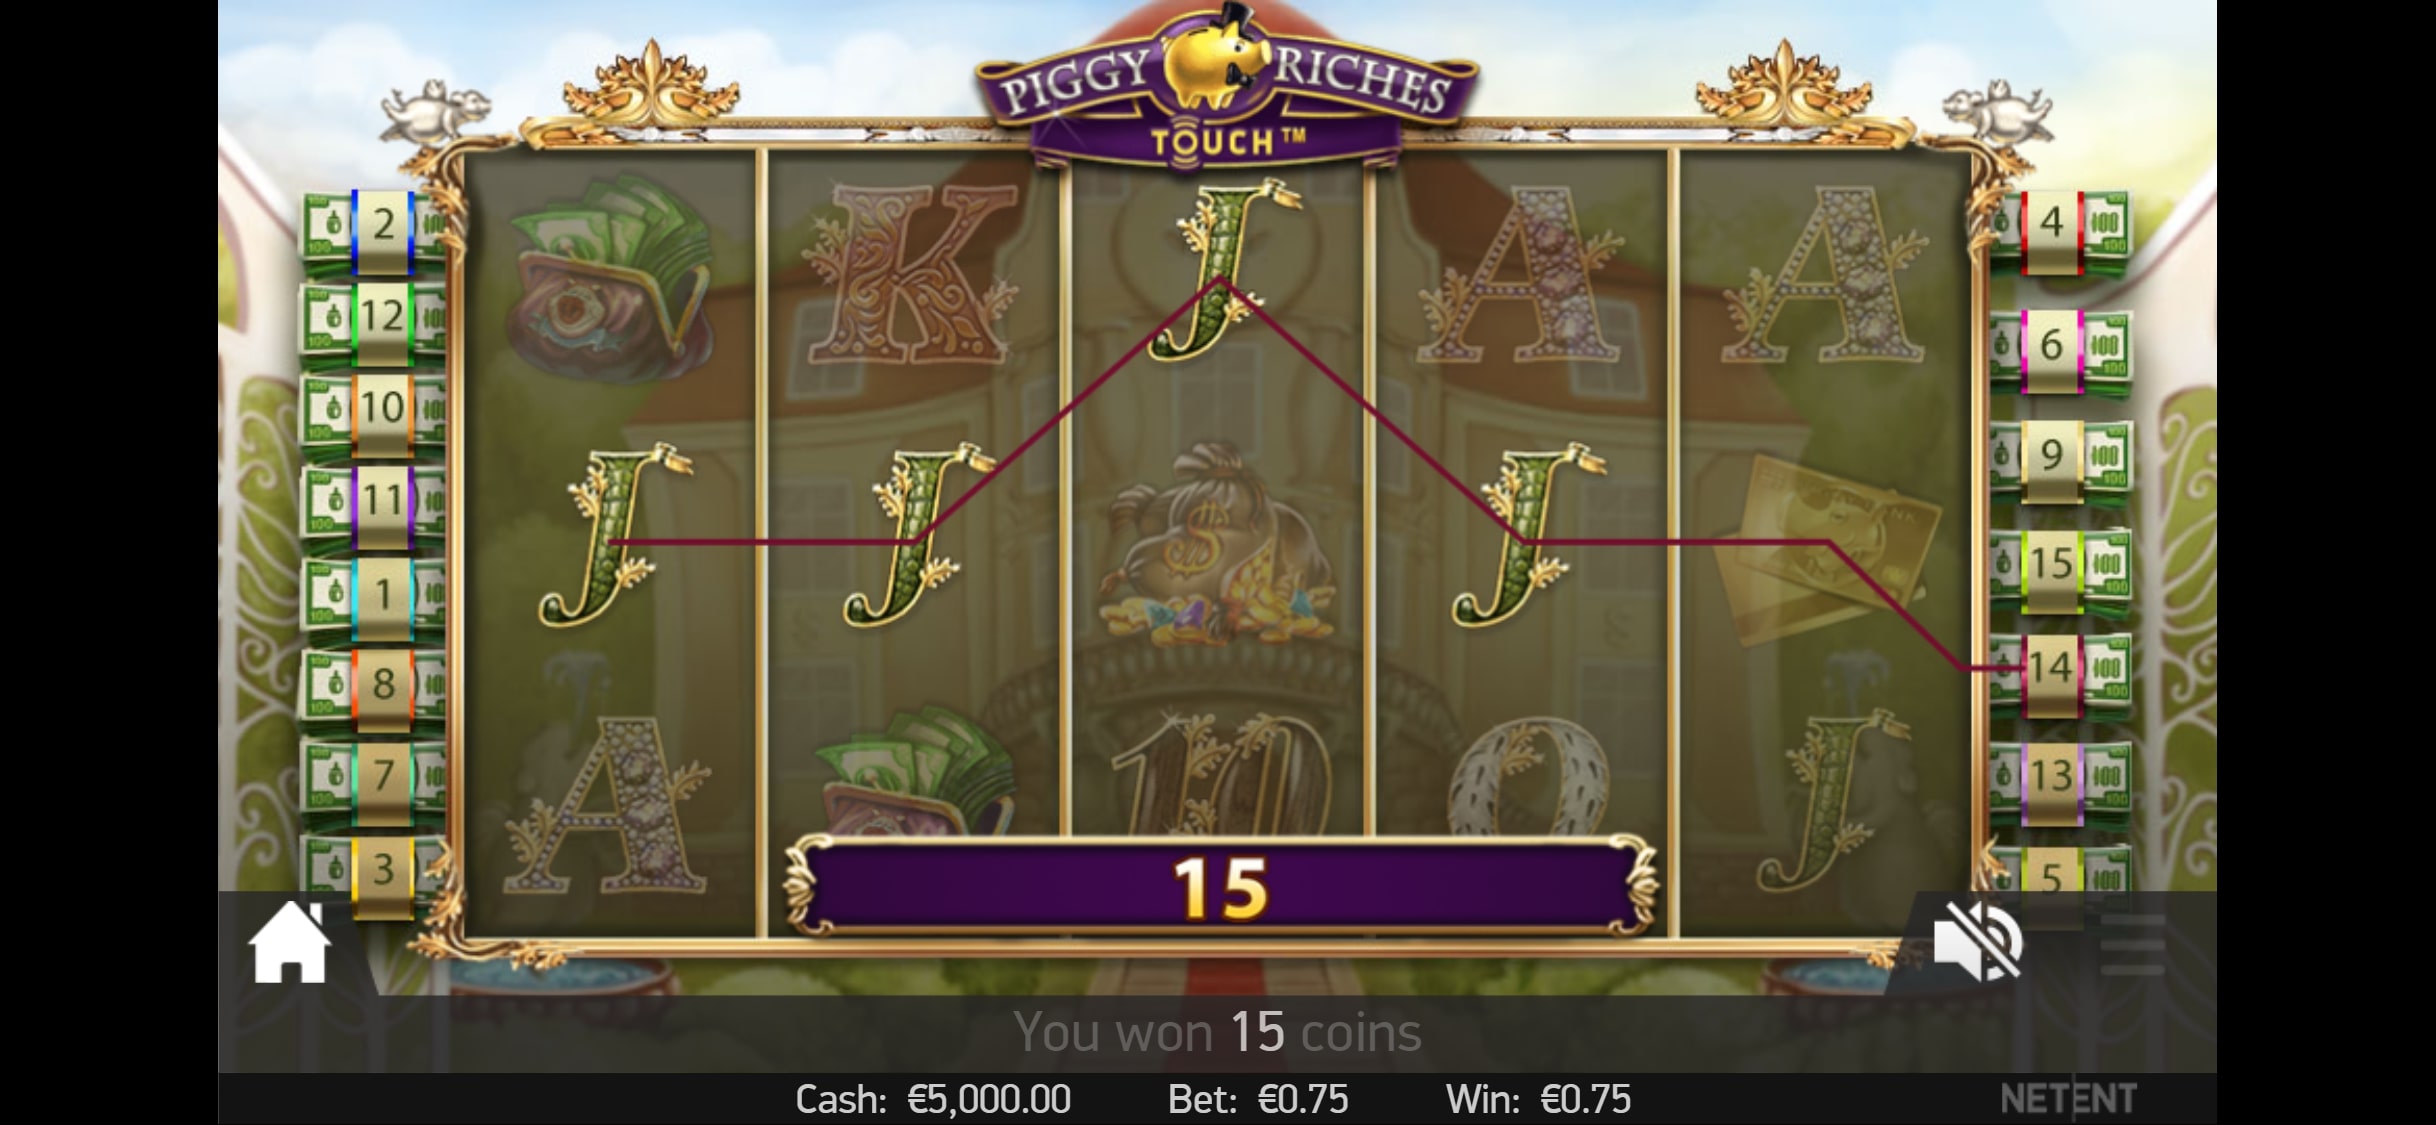 HighRoller Casino Mobile Slot Games Review